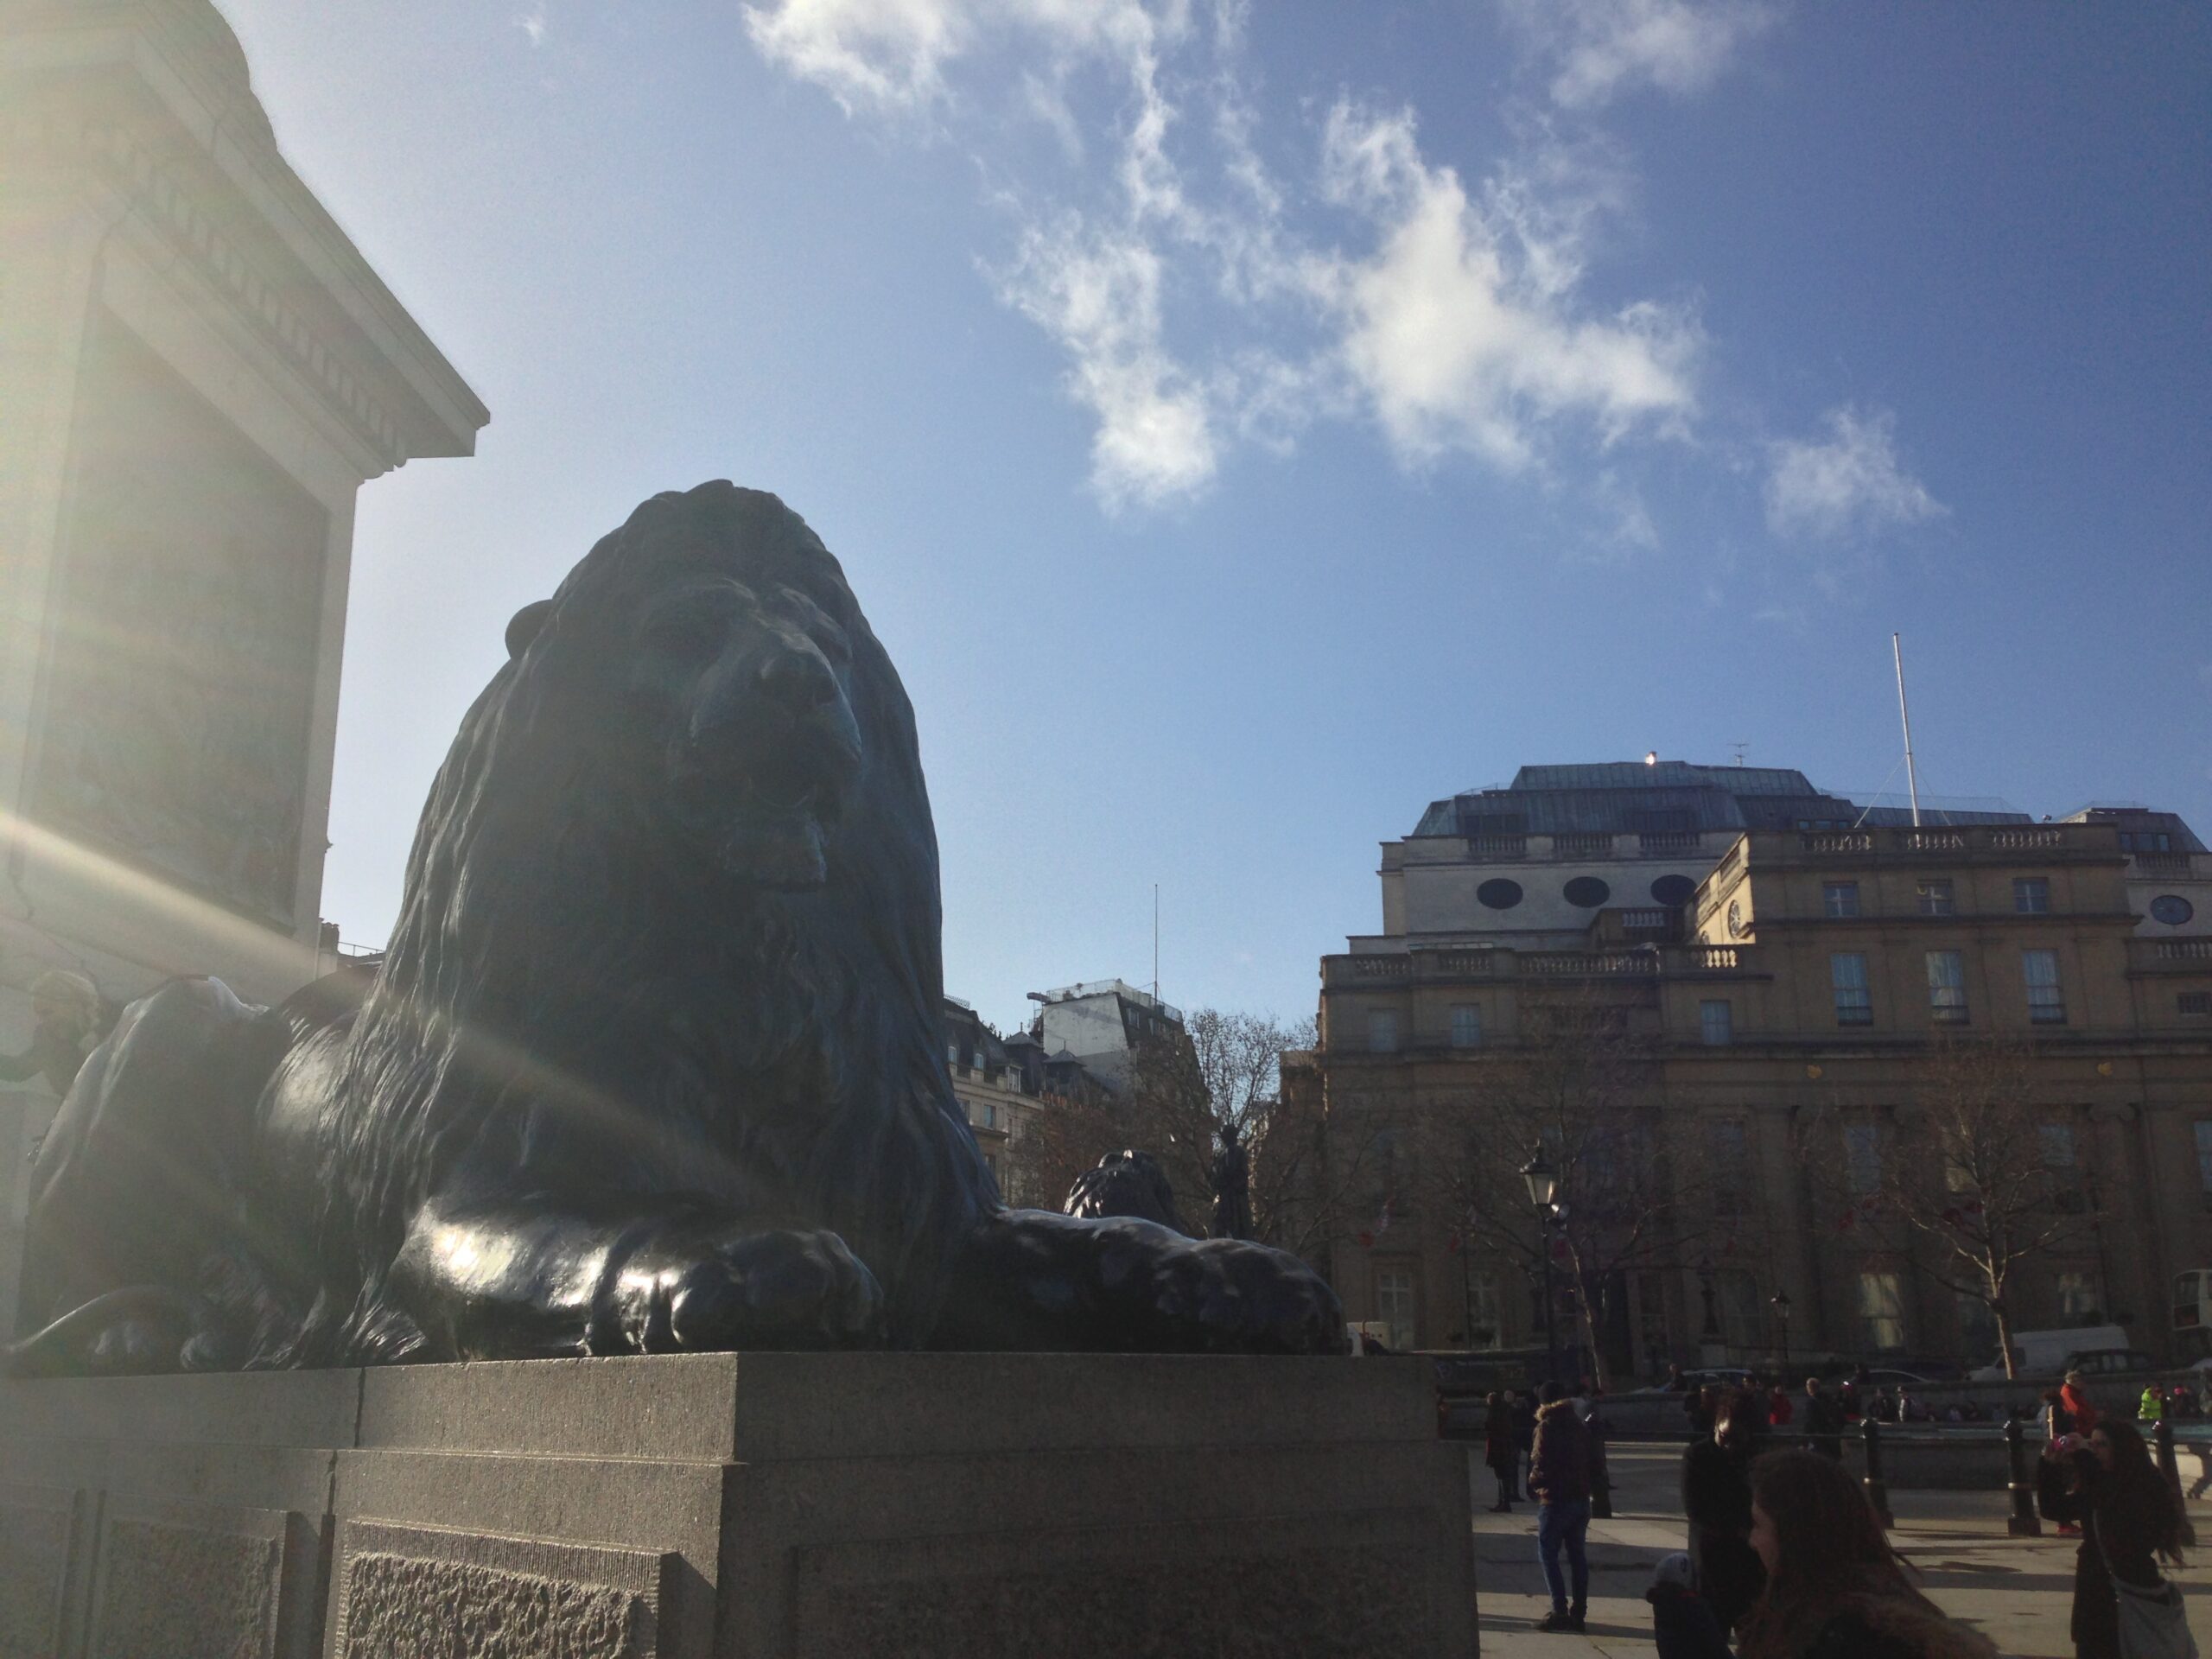 A lion statue guards war monument Nelson's Column in London's Trafalgar Square.